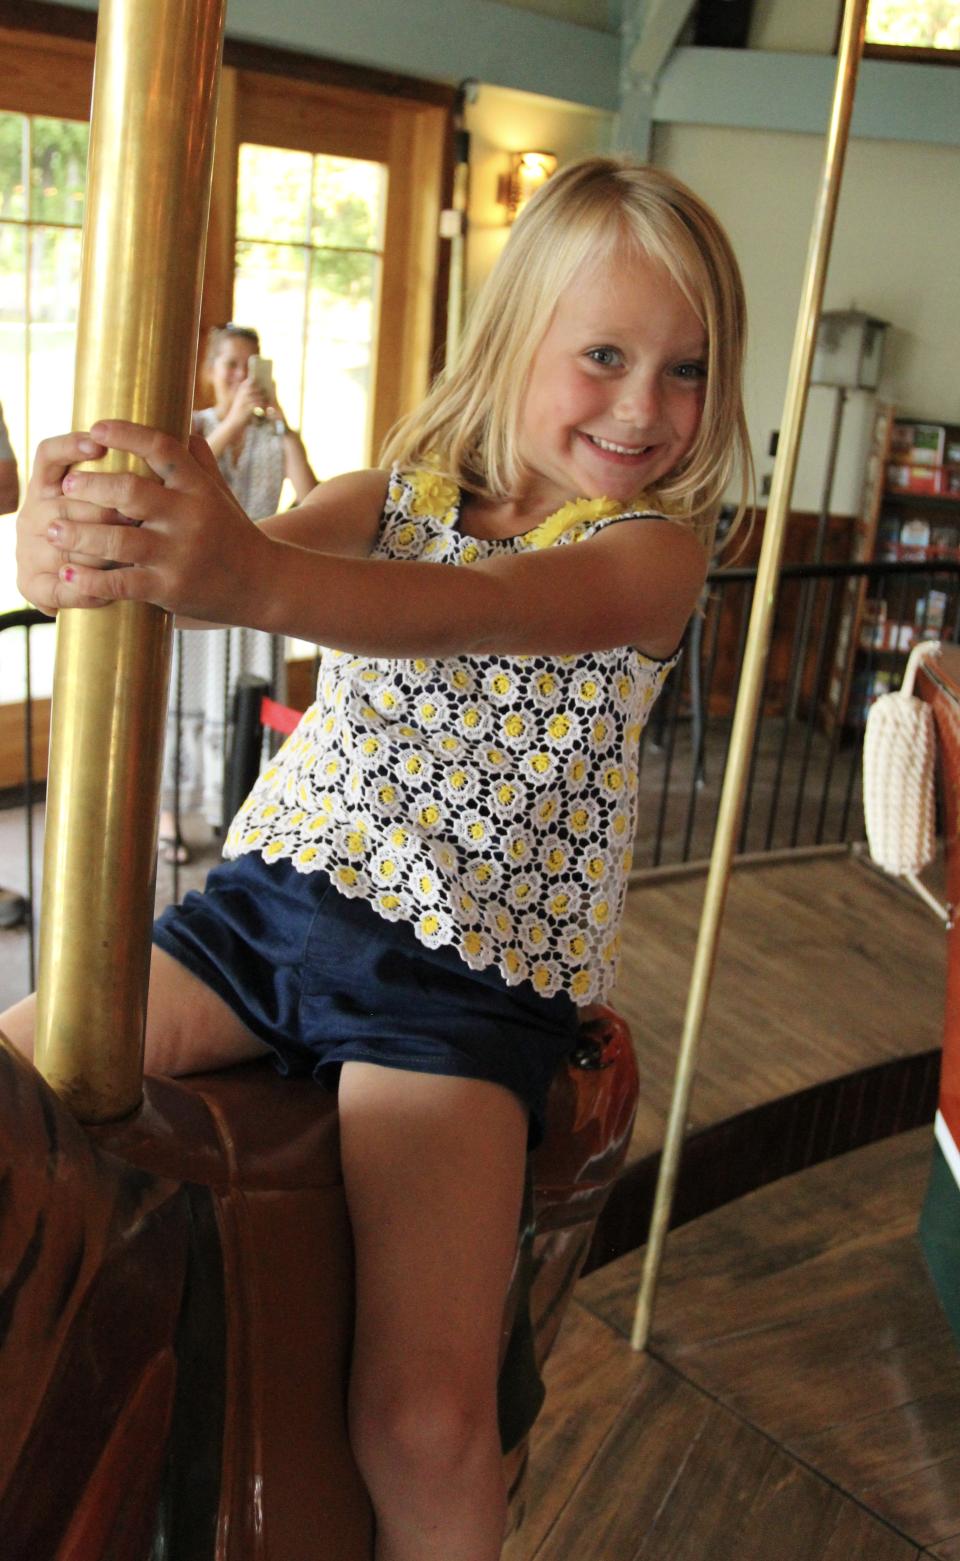 A blonde girl smiles while riding a carousel.